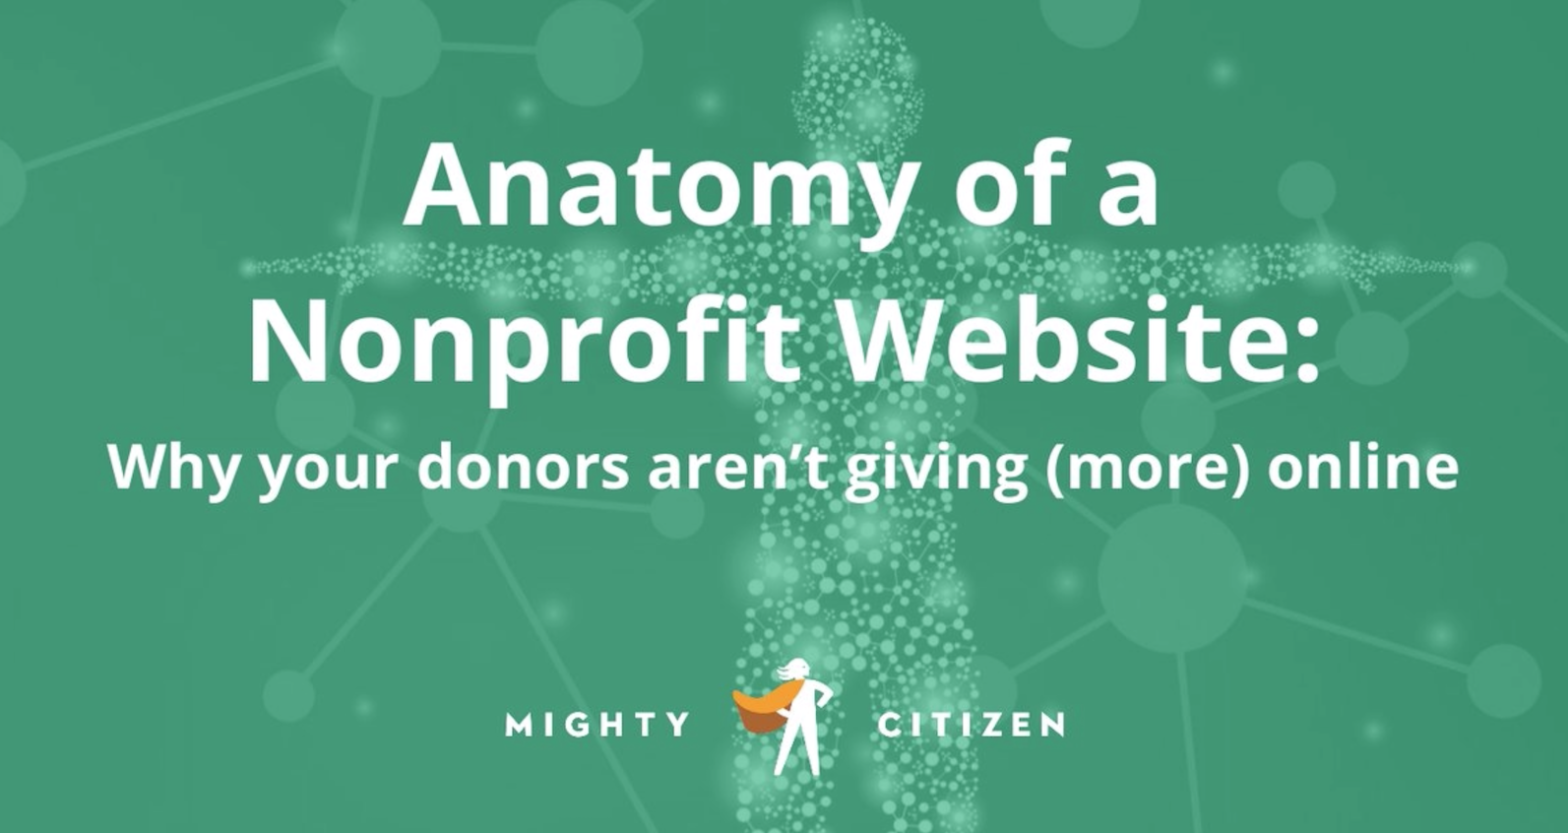 Anatomy-of-a-Nonprofit-Website-nonprofit